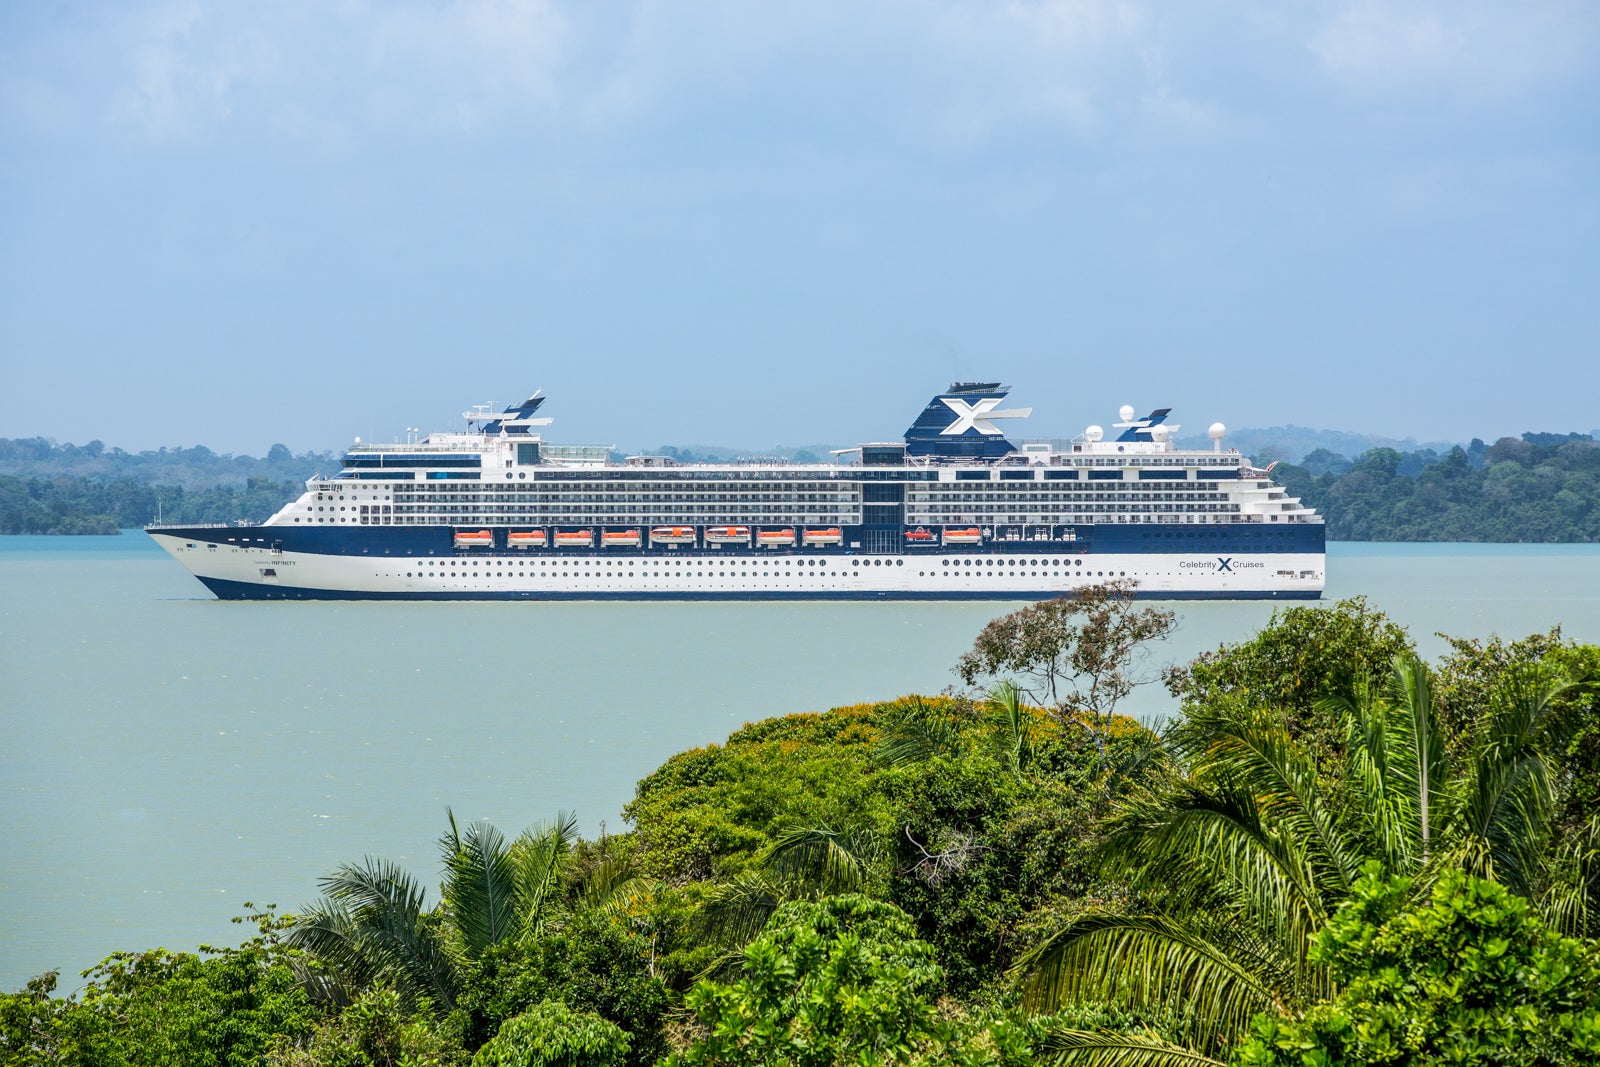 cruise ships carrying capacity